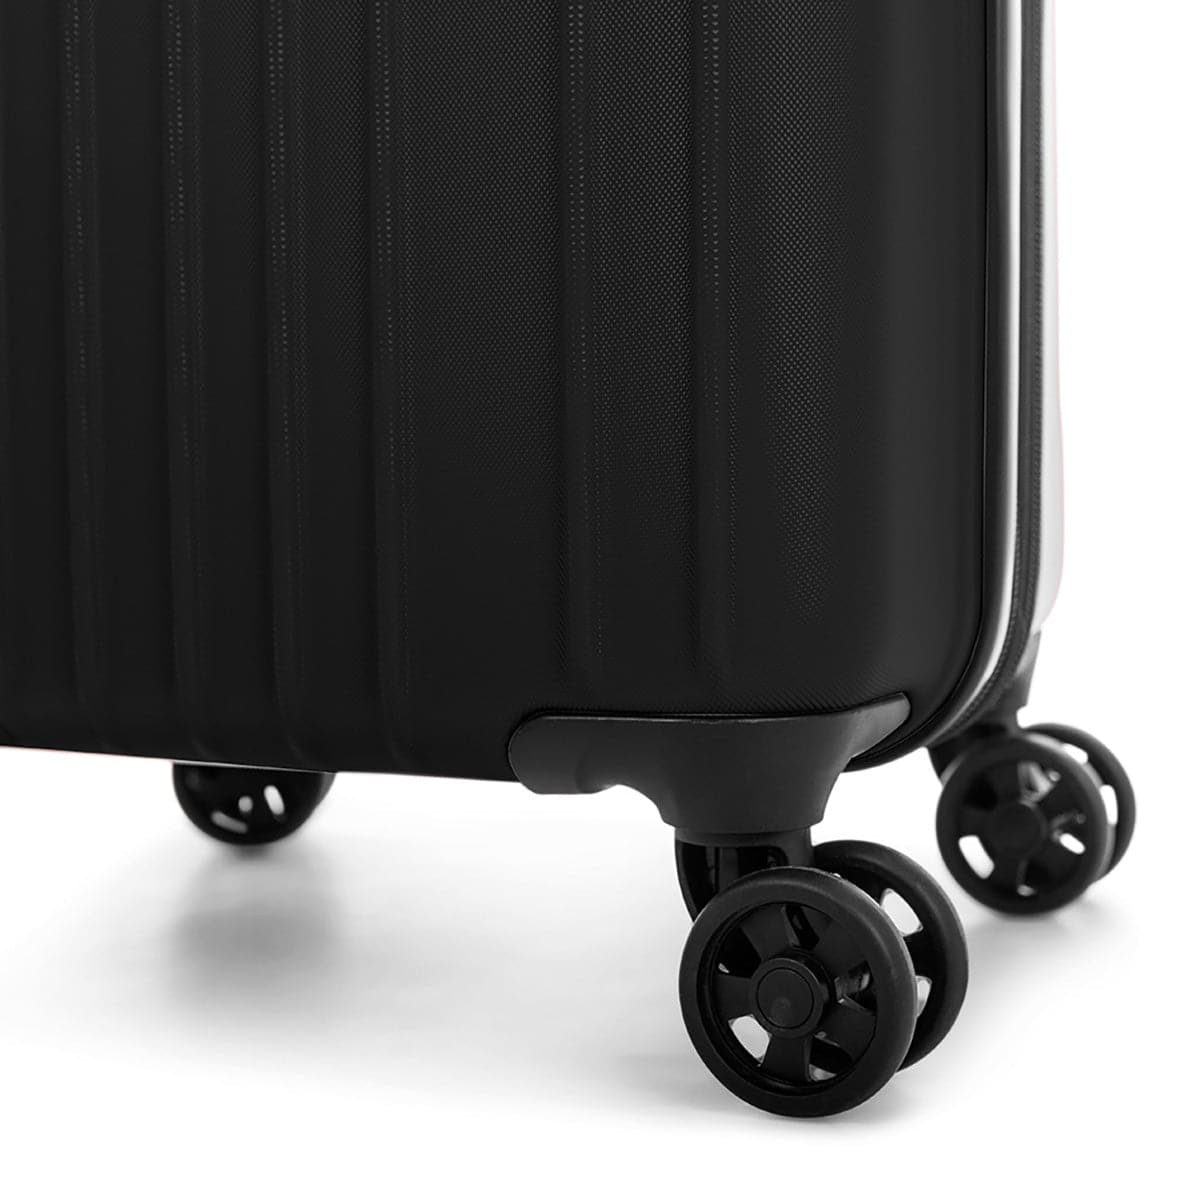 Swiss Mobility PVG 3 Piece Luggage Set